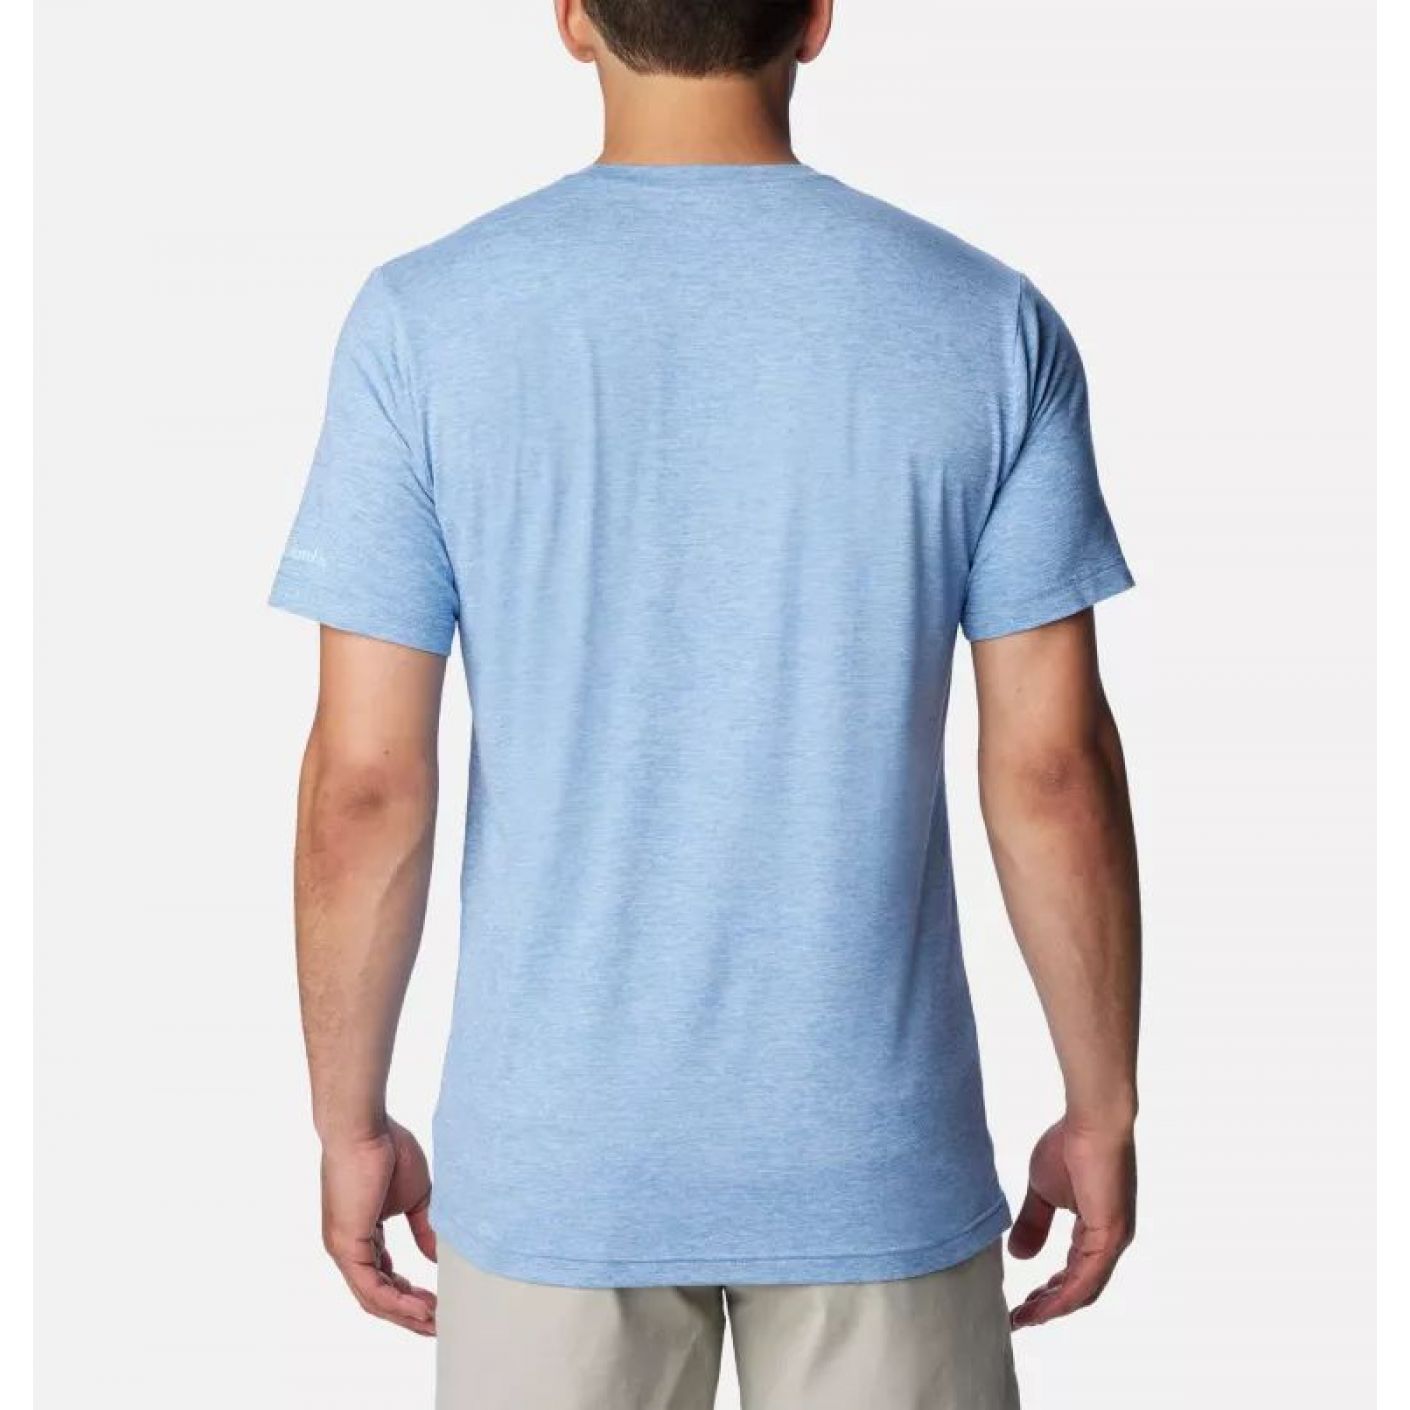 Columbia T-Shirt Kwick Hike Skyler da Uomo